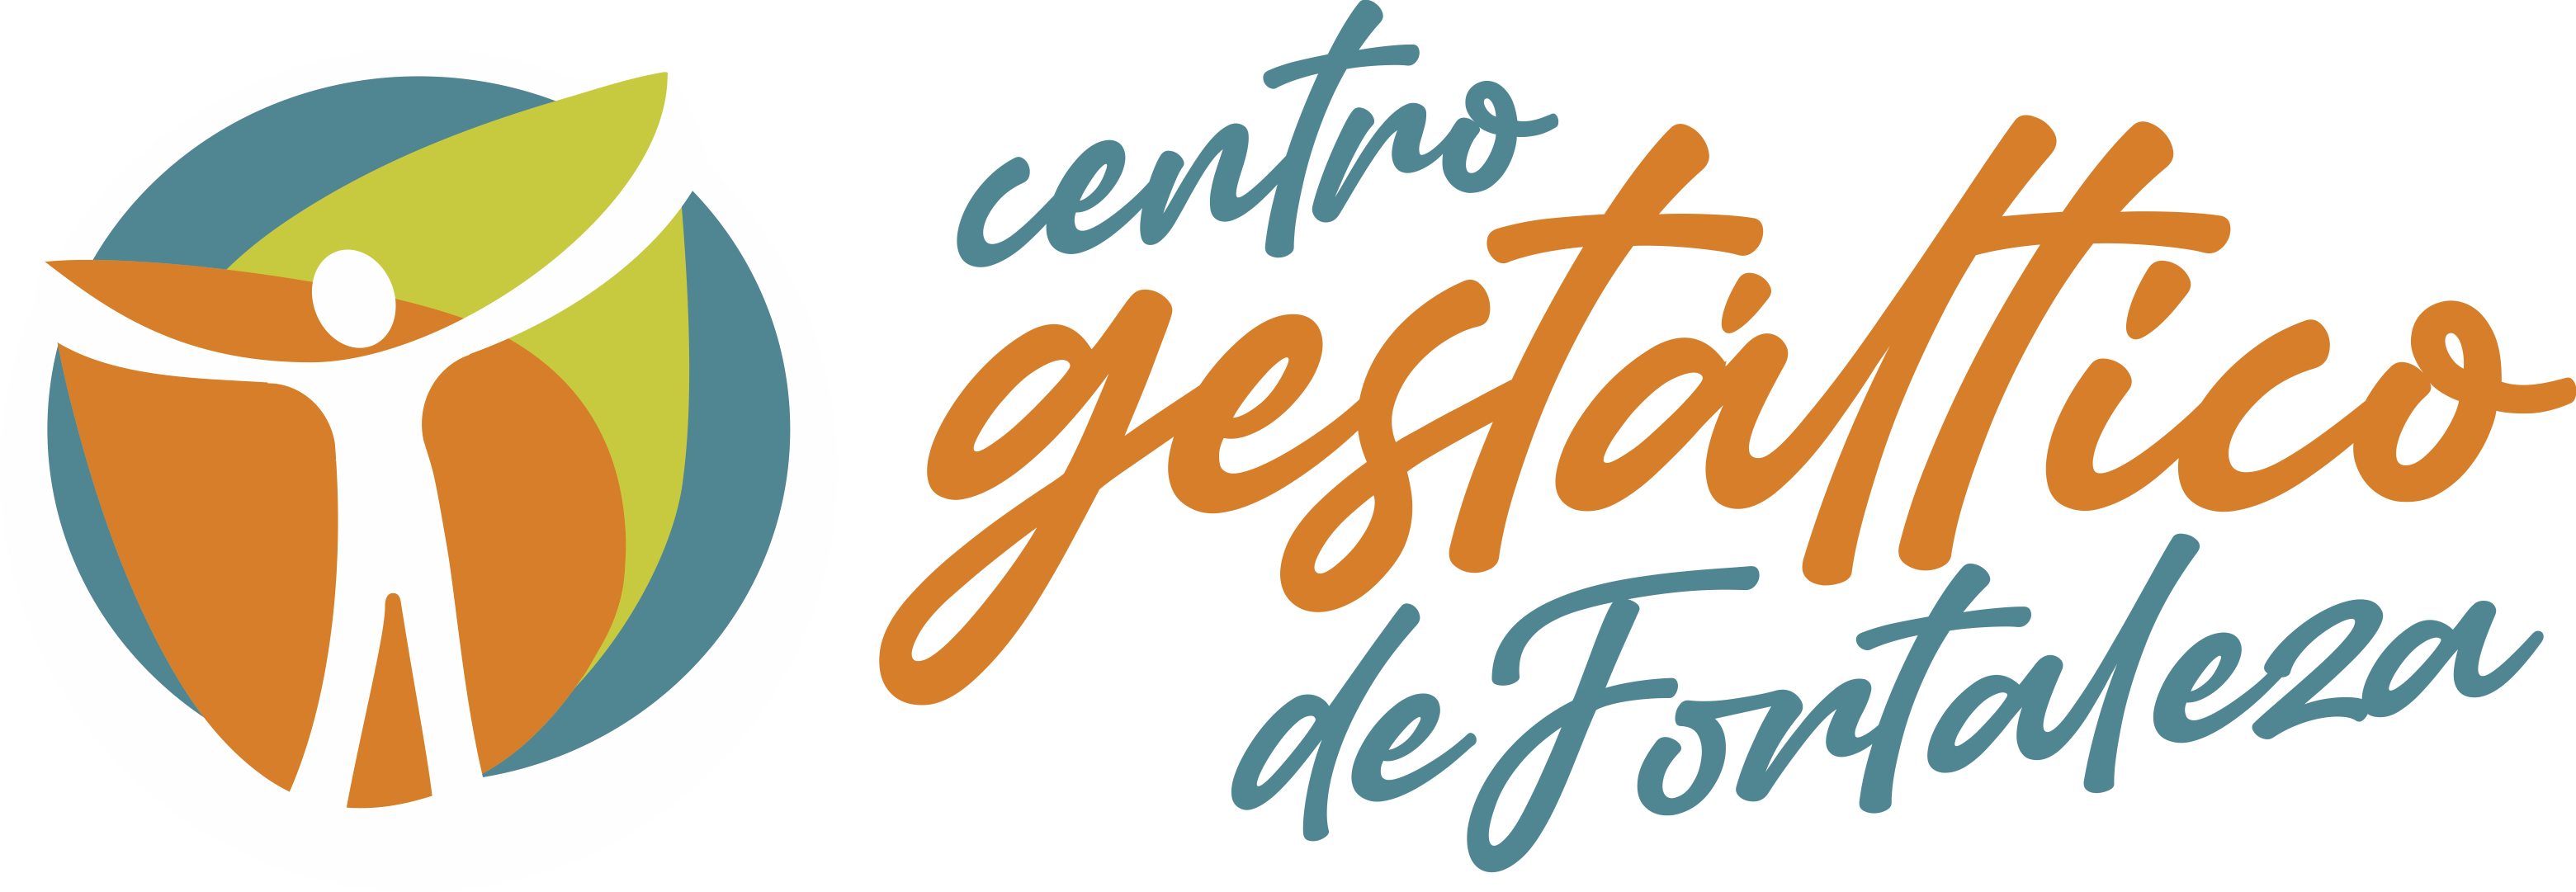 Centro Gestáltico de Fortaleza